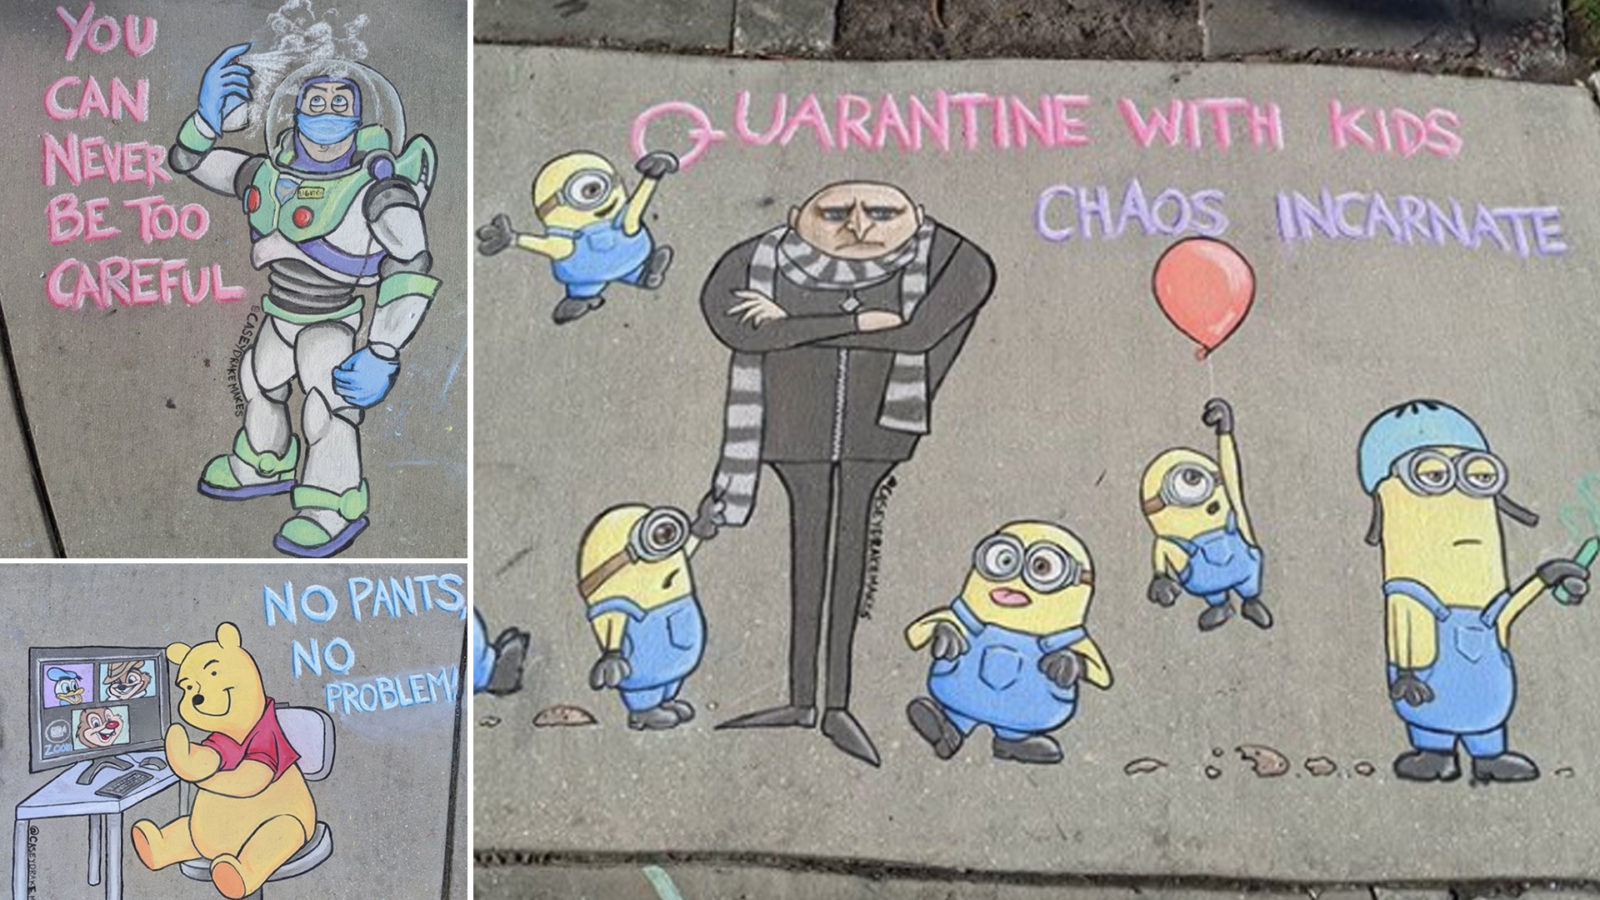 Chalk drawings on the sidewalk.